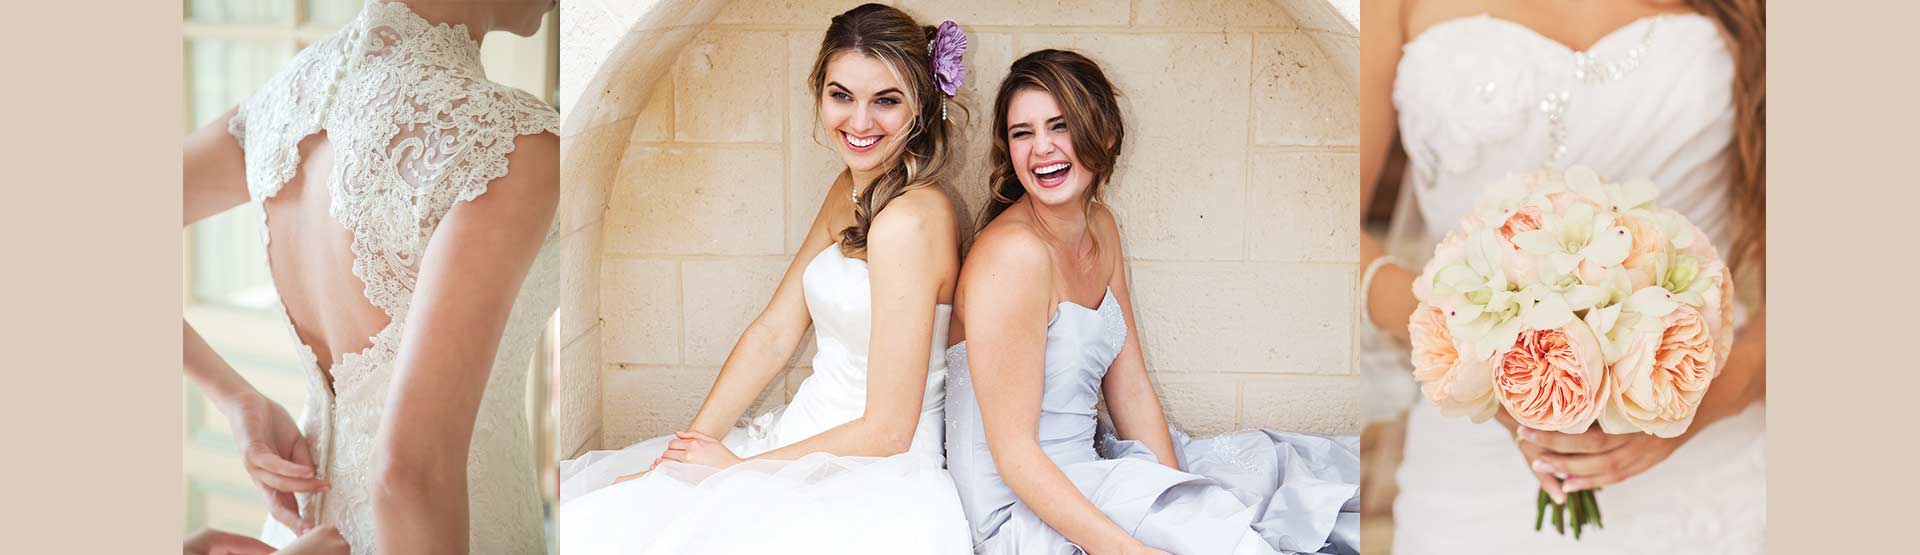 75 wedding registry ideas – The Internet's Maid of Honor